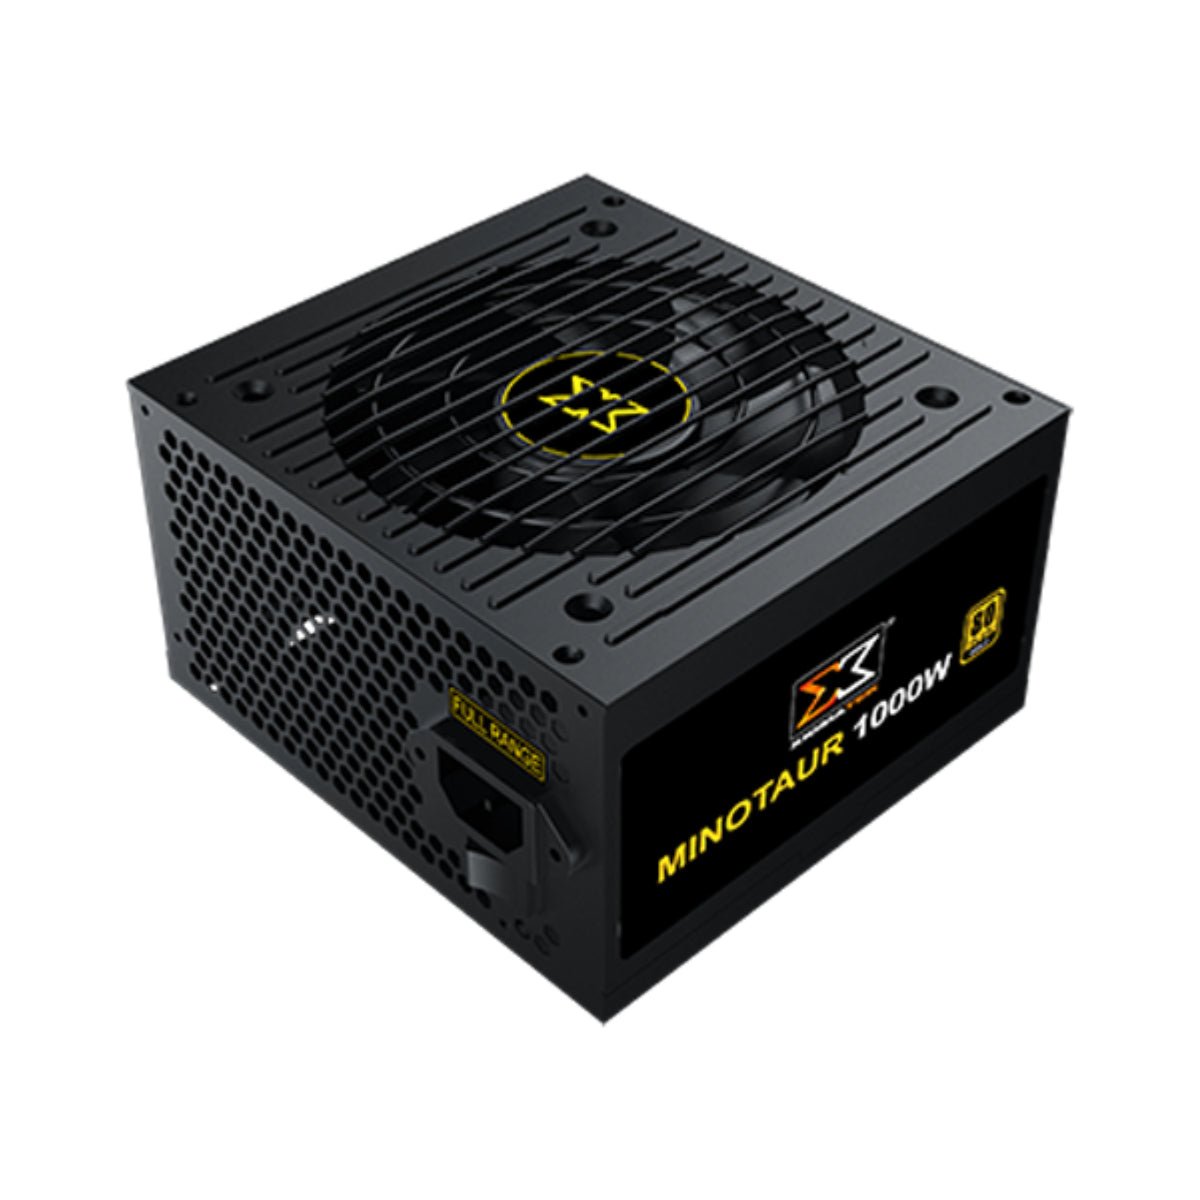 Xigmatek Minotaur 1000W 80+ Gold Fully-Modular Power Supply - Store 974 | ستور ٩٧٤